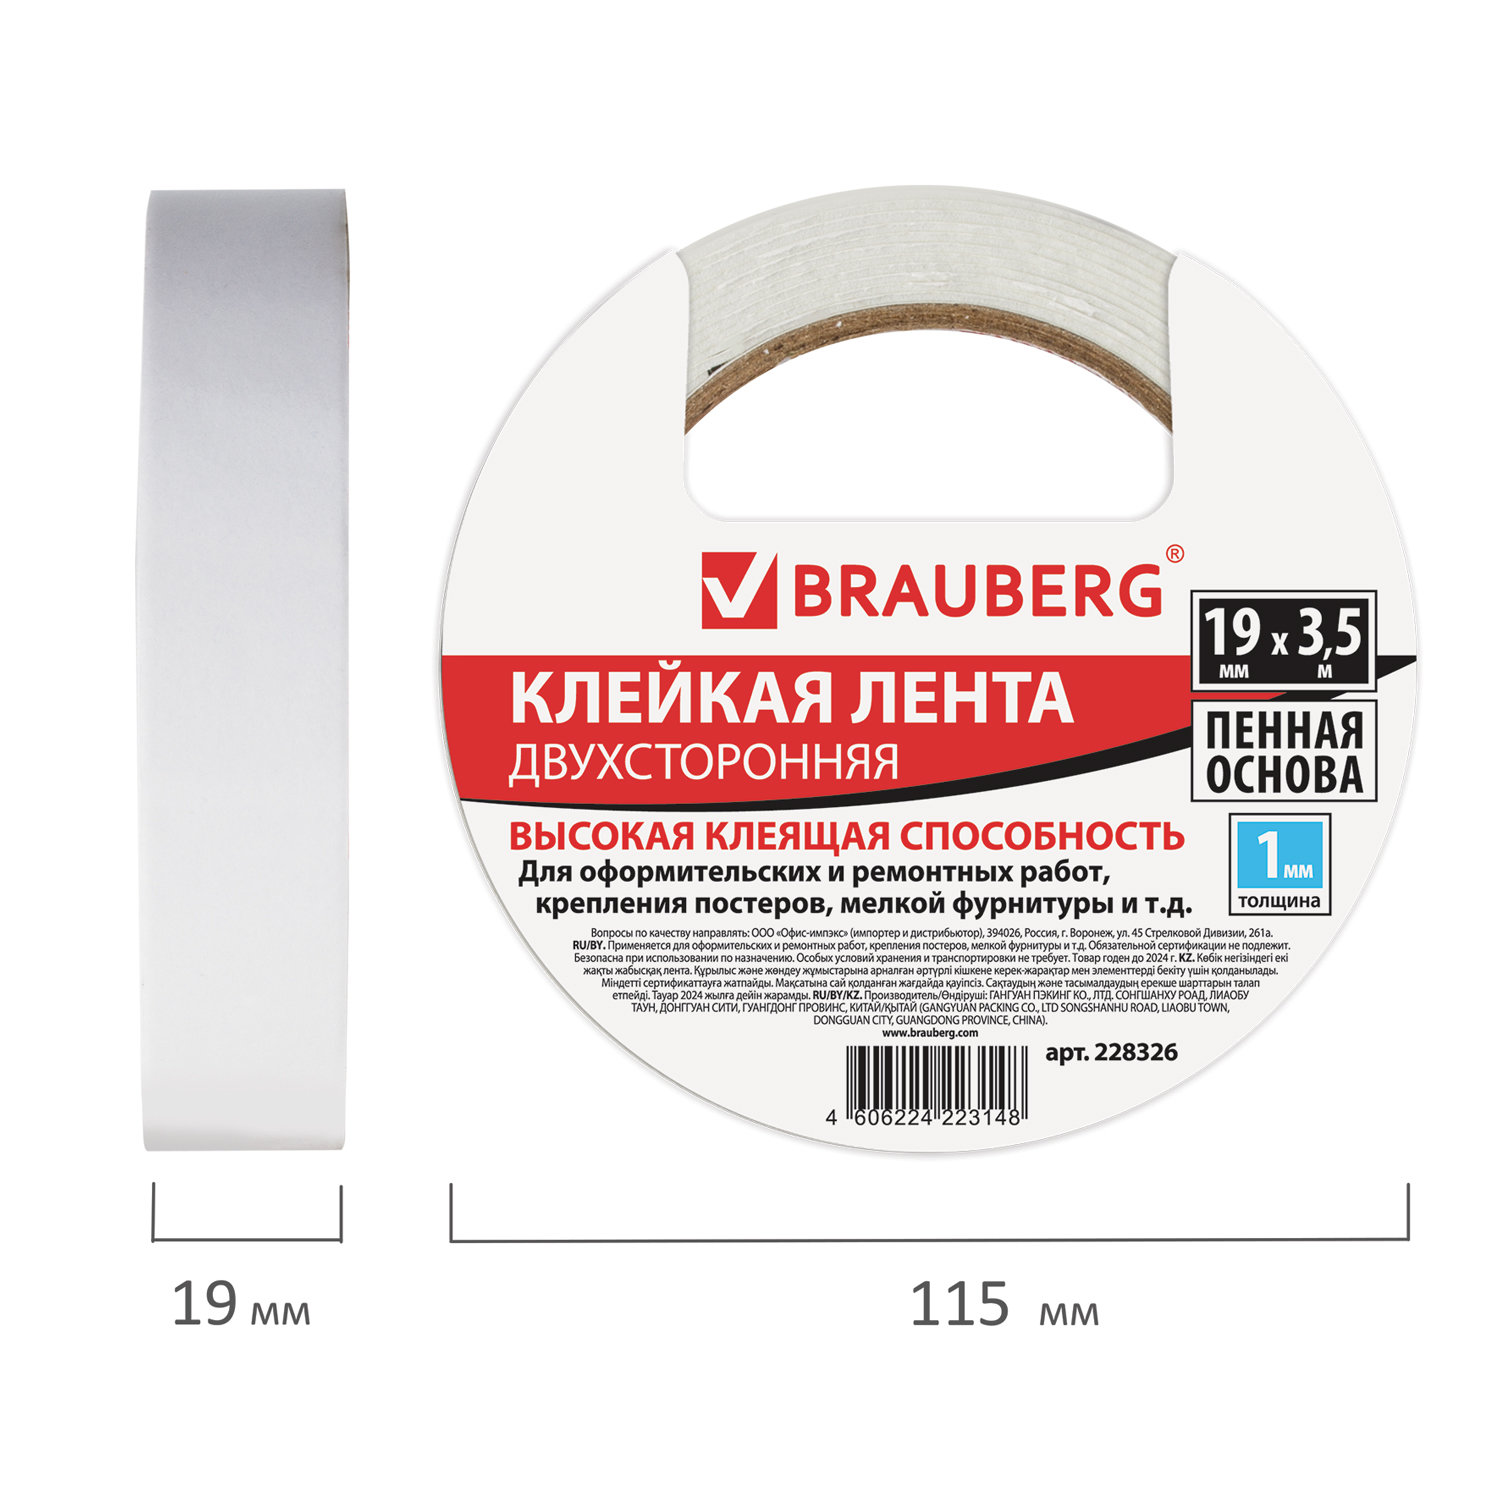 Клейкая лента Brauberg двухсторонняя 19 мм х 3.5 м на вспененной основе 1 мм - фото 8